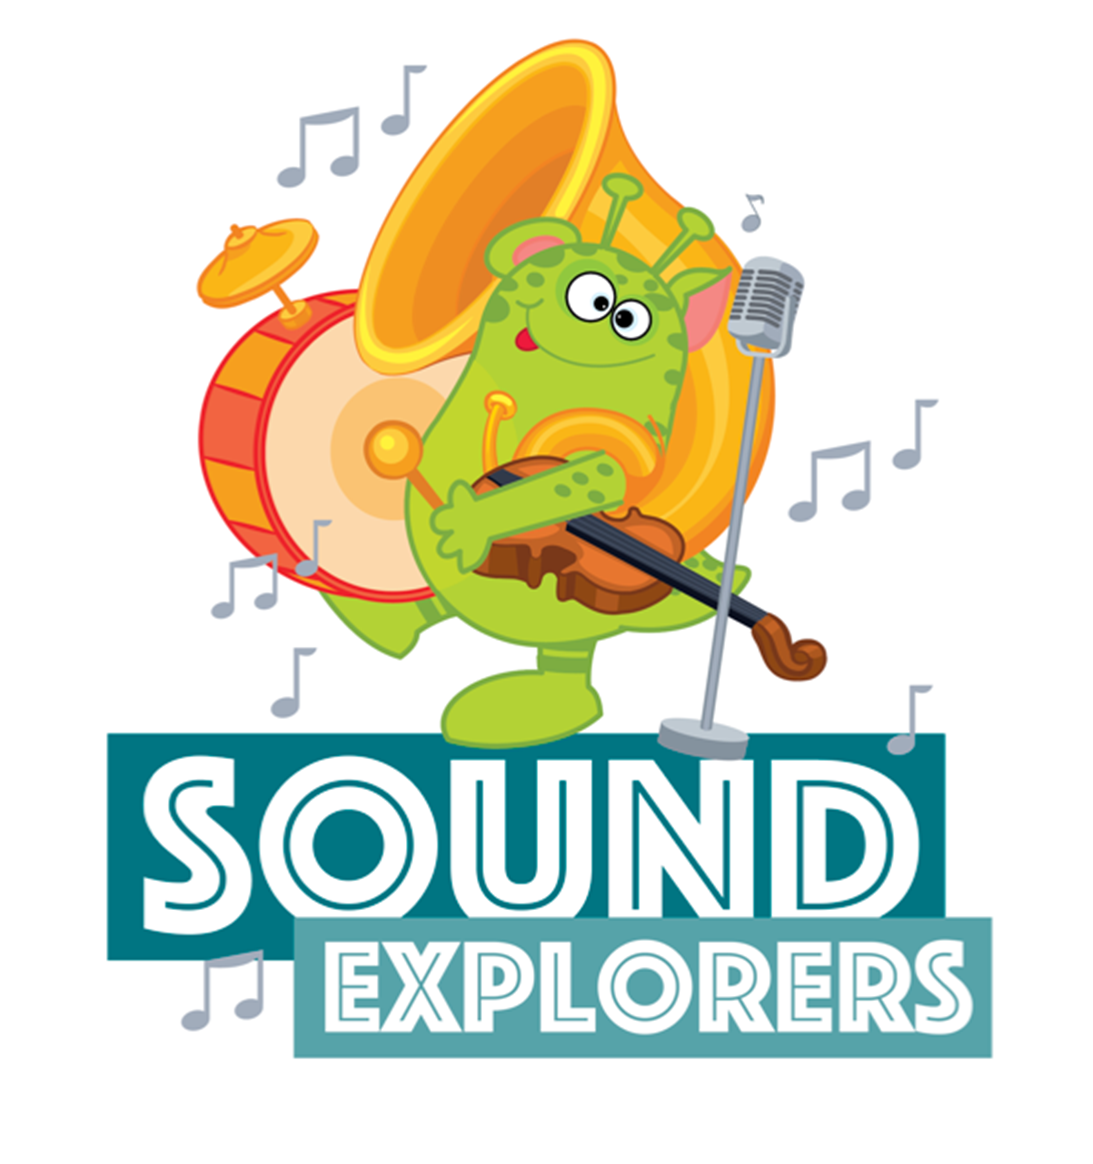 New class coming soon!  #scmkids #soundexplorers